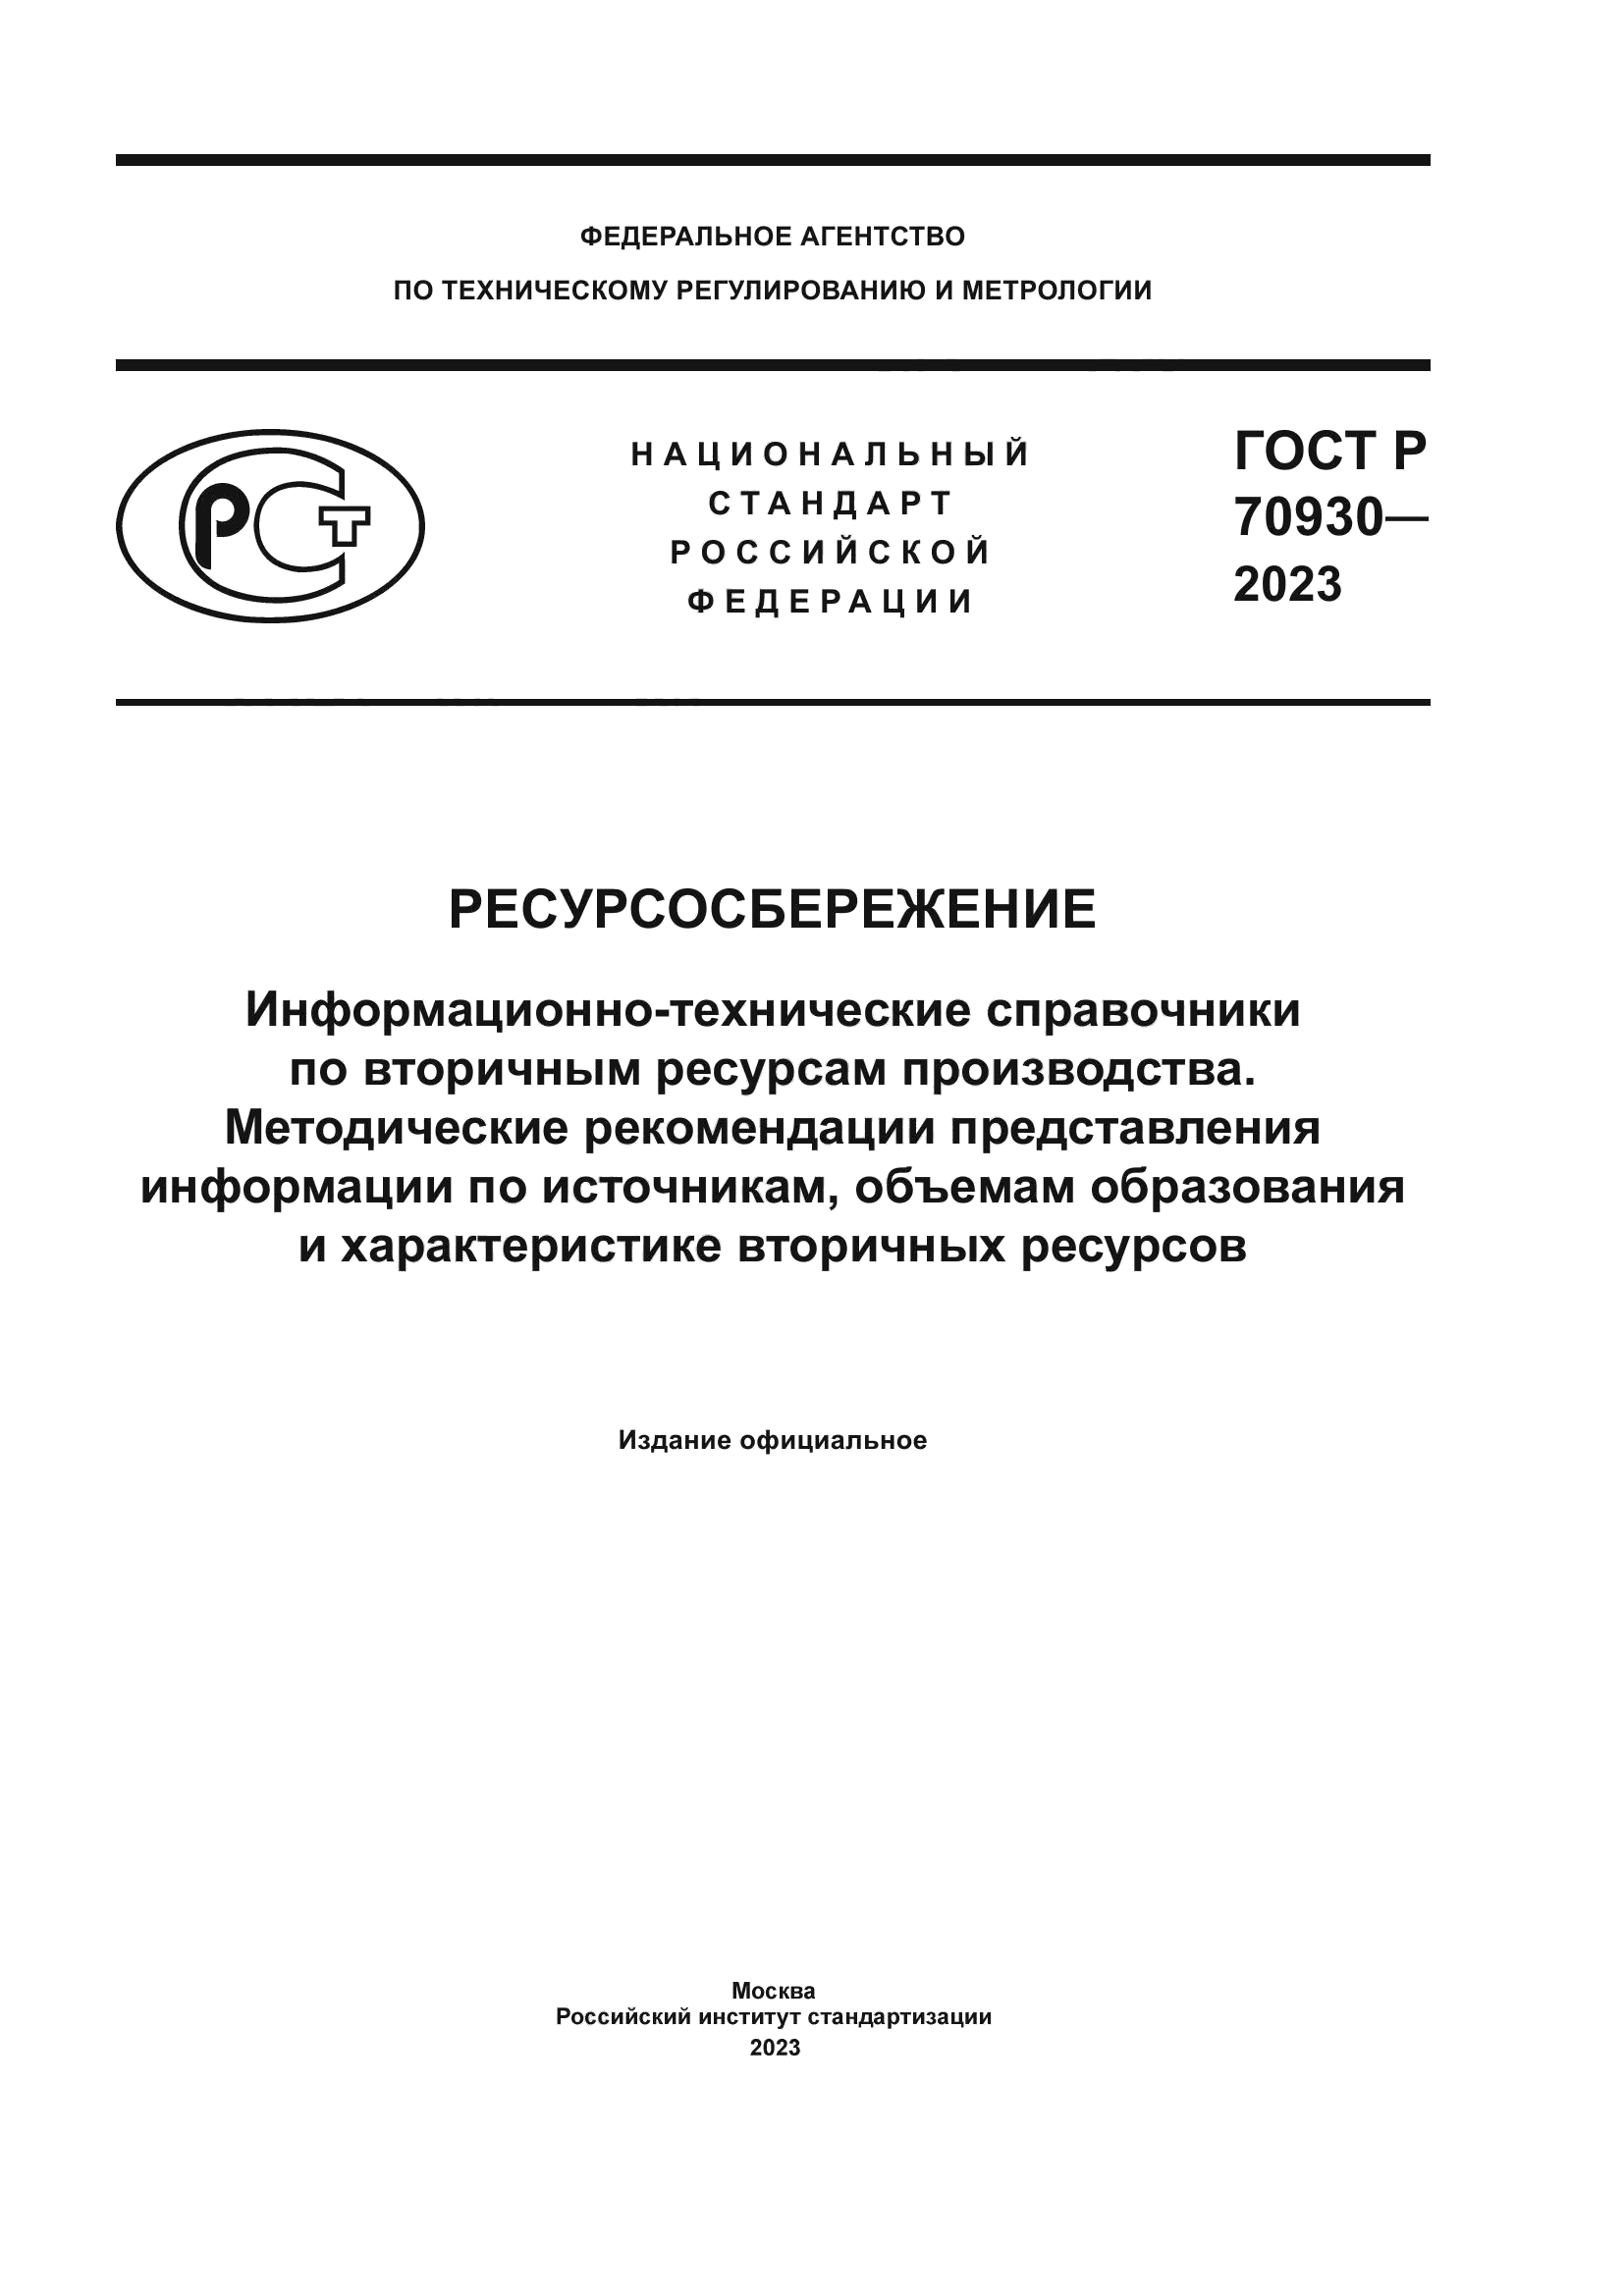 ГОСТ Р 70930-2023